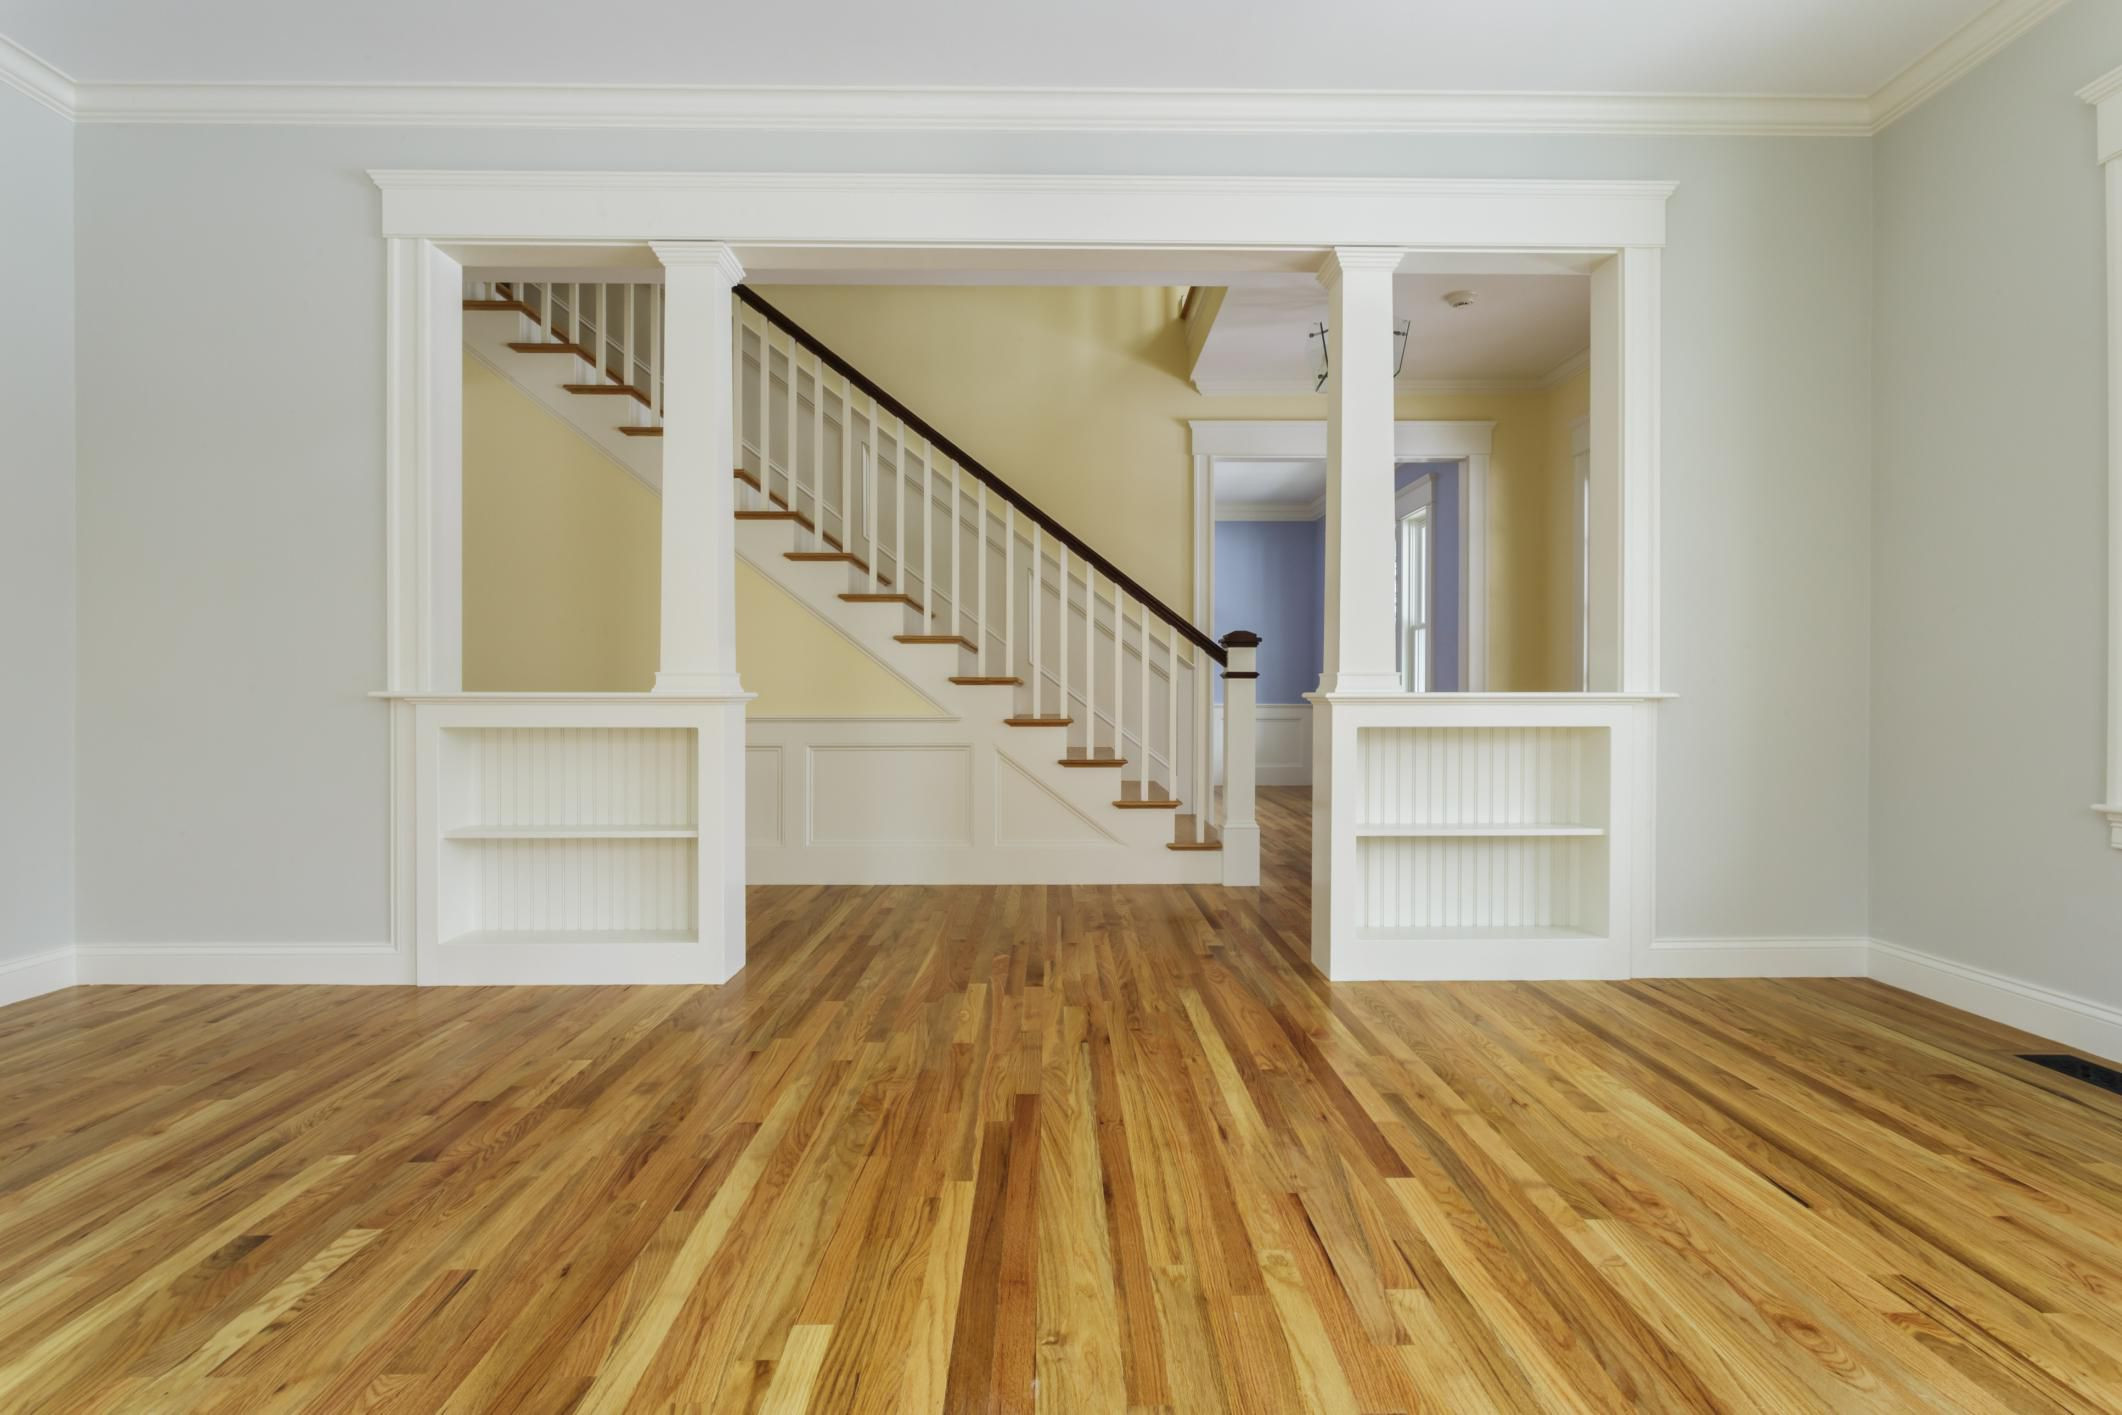 16 Lovely Price for Sanding and Refinishing Hardwood Floors 2022 free download price for sanding and refinishing hardwood floors of guide to solid hardwood floors for 168686571 56a49f213df78cf772834e24